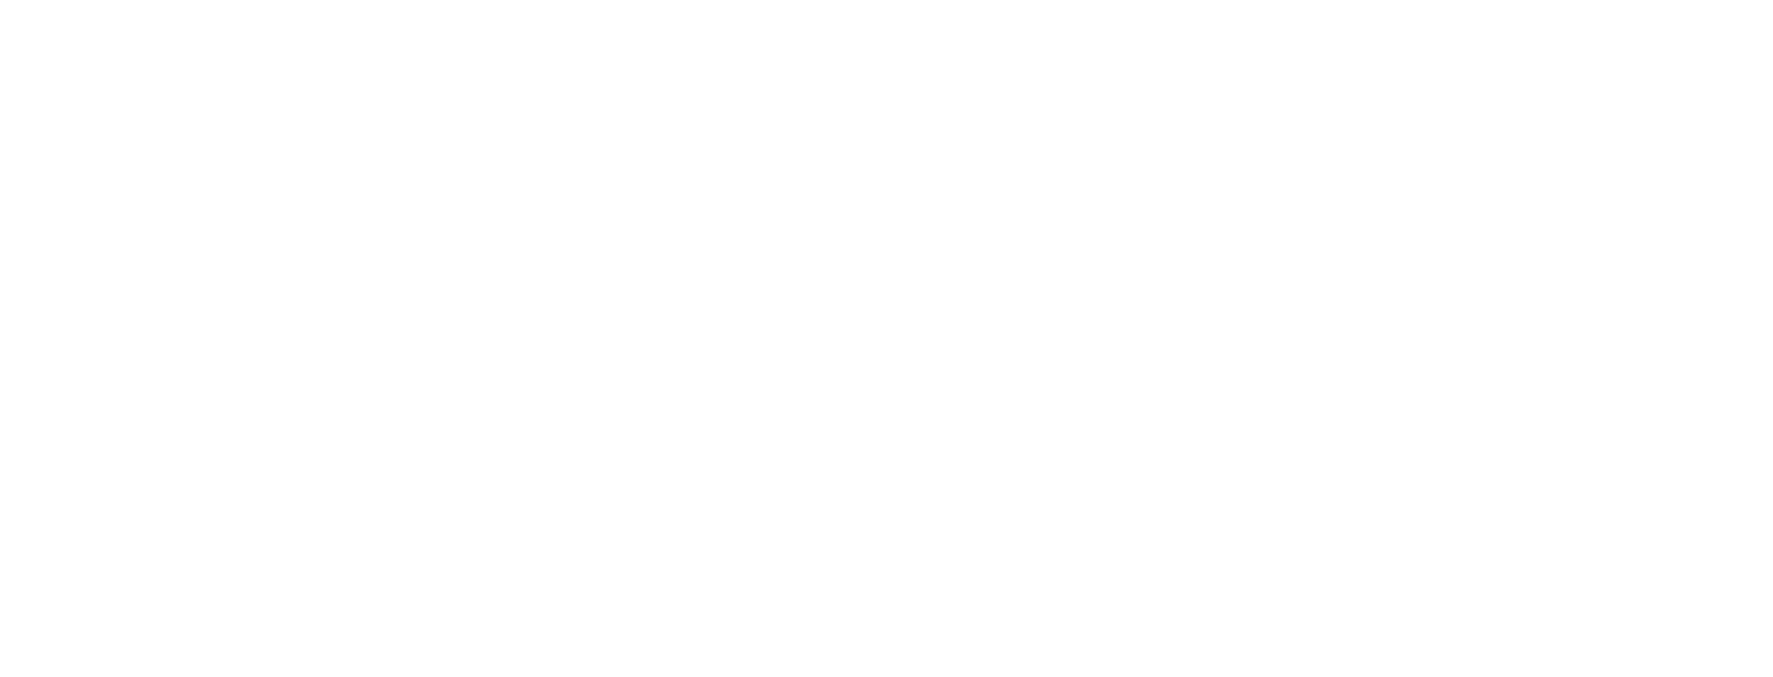 Desafio Vegetariano Brasil